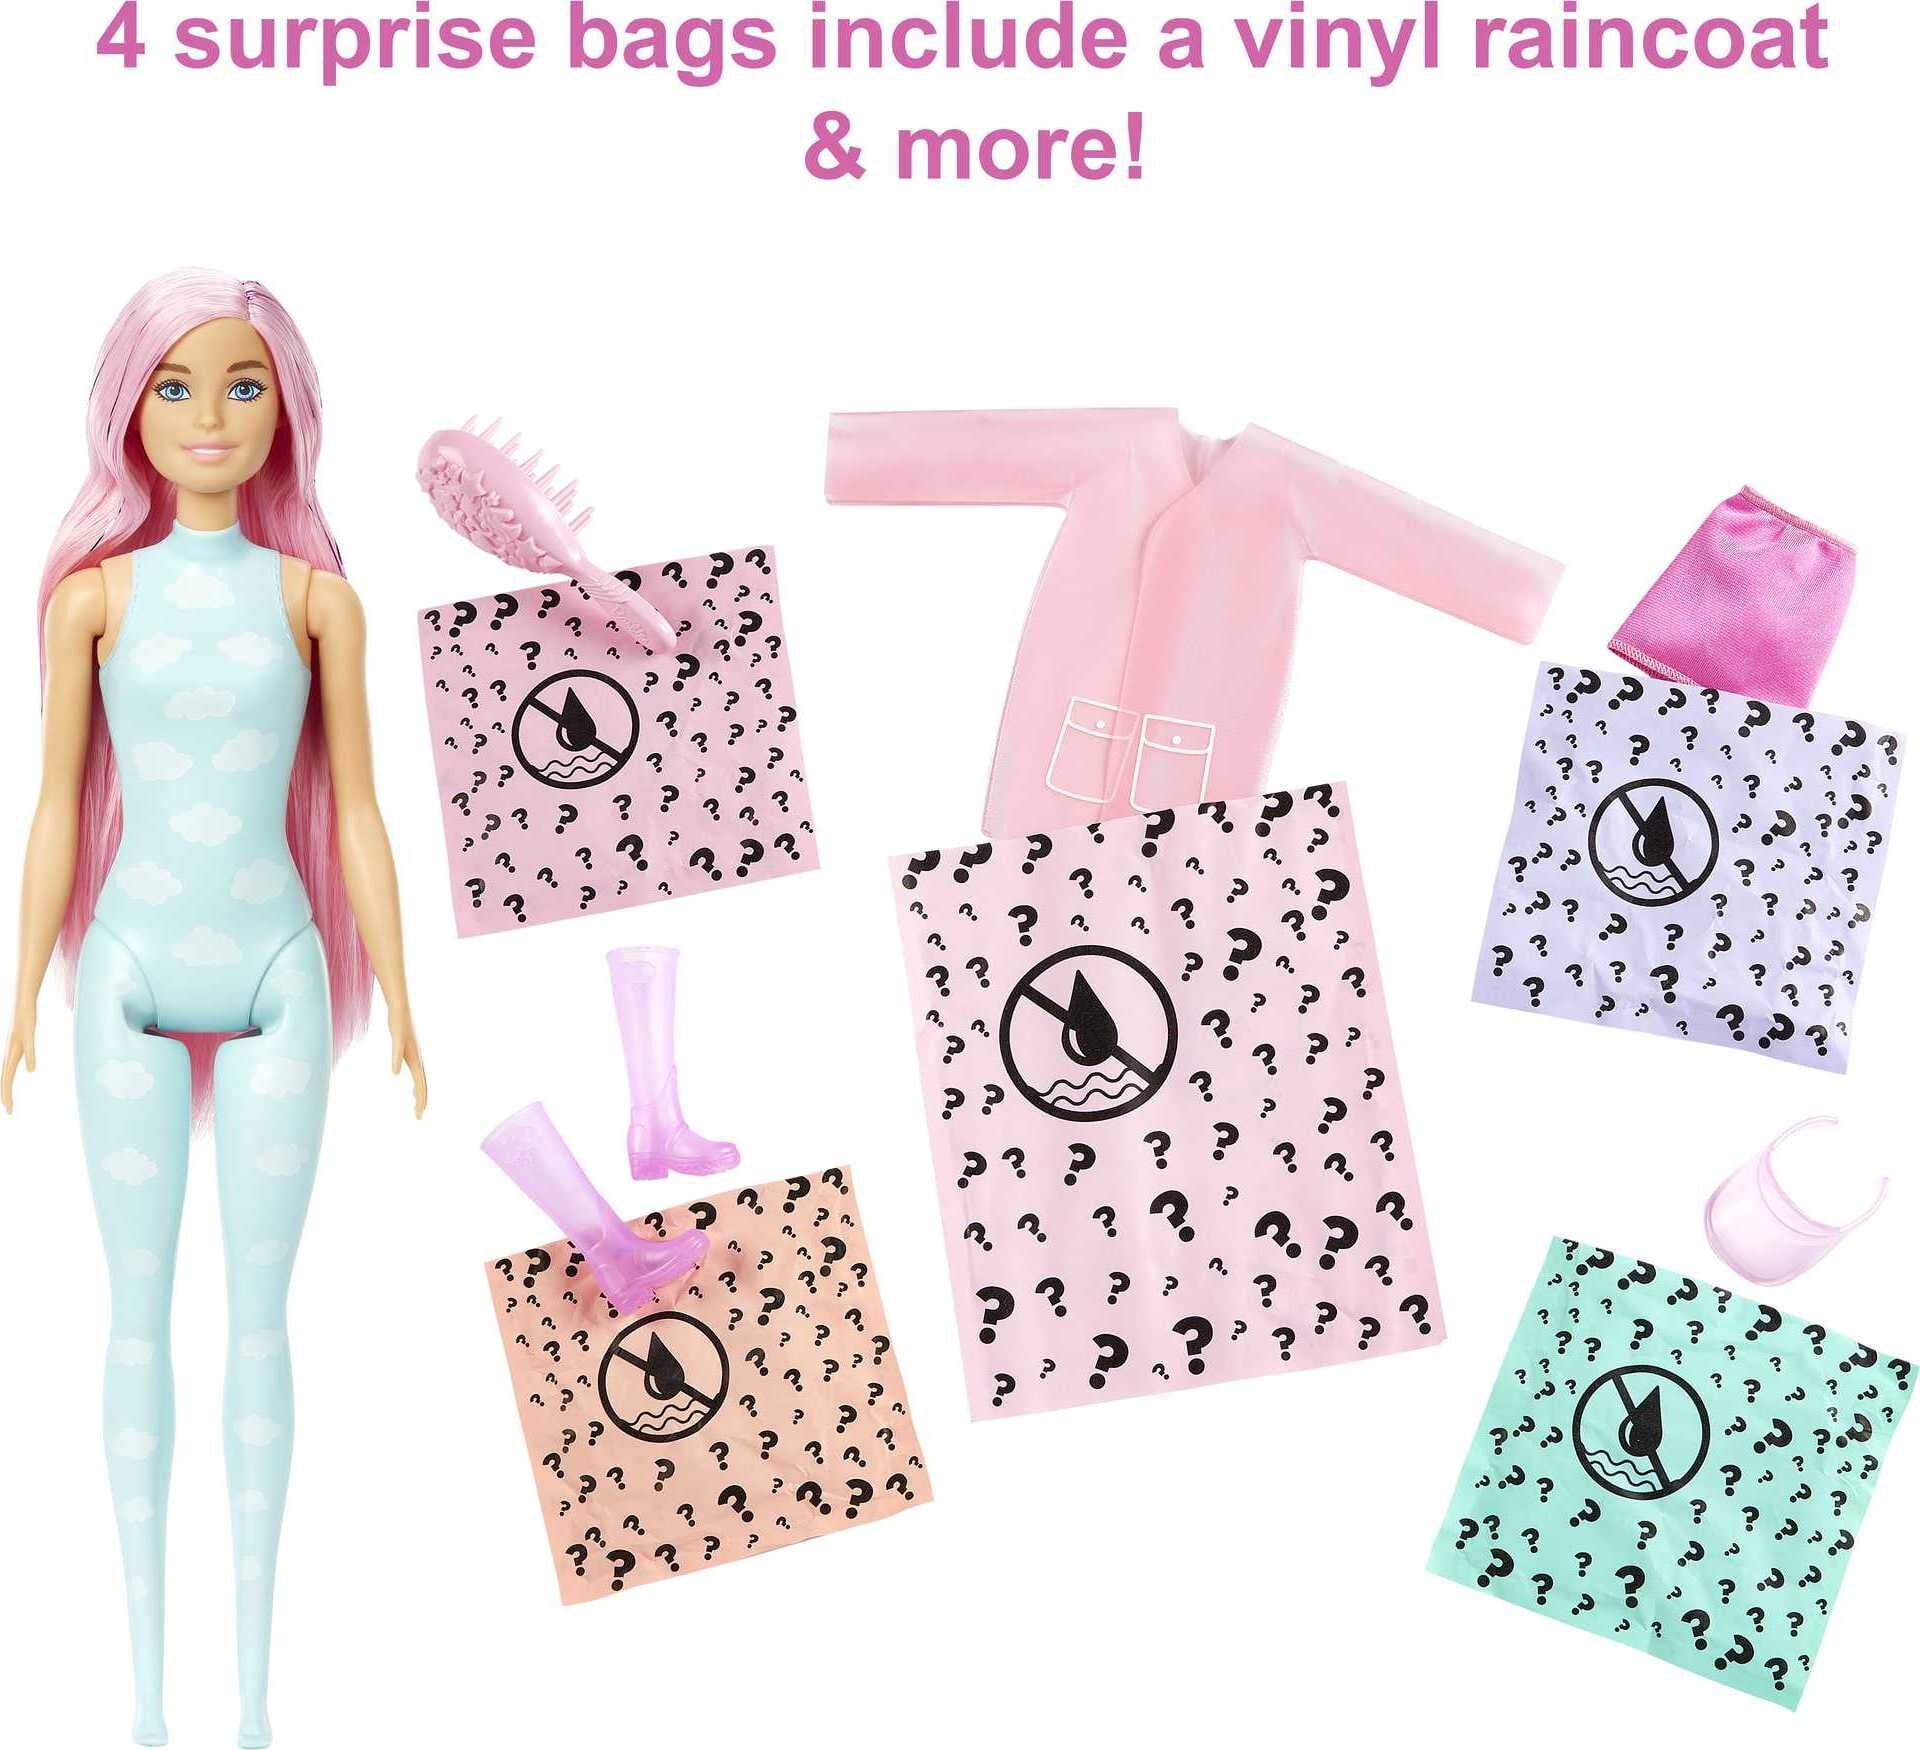 1 Barbie Color Reveal 2020 Orange Sunny N Cool Beach Series 3